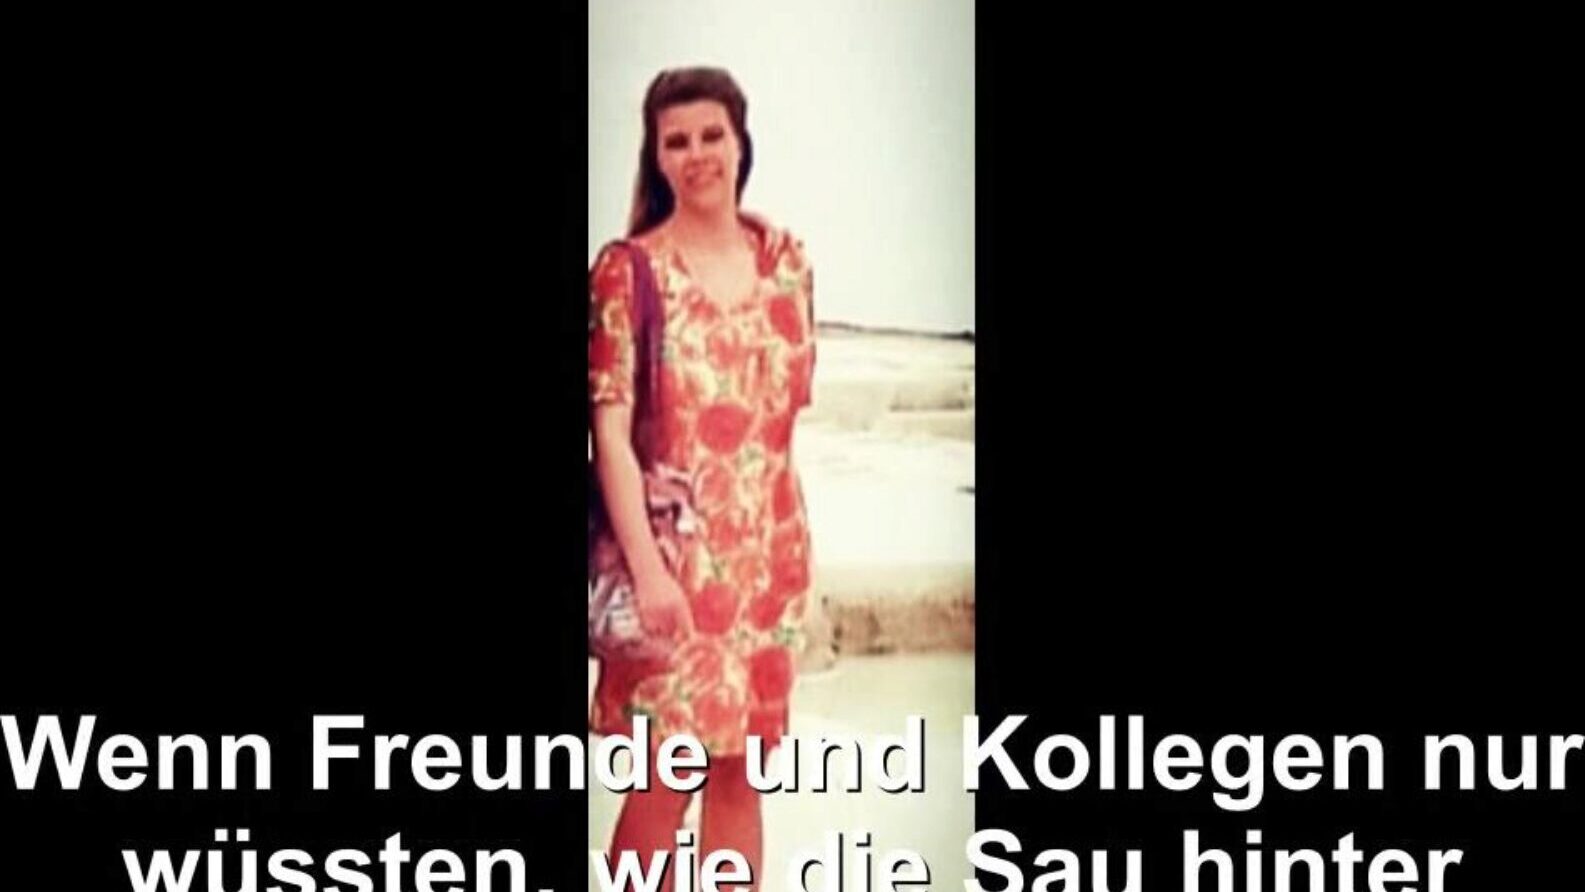 tysk husmor eksponeret, gratis rør tysk hd porno bd se tysk husmor eksponeret filmscene på xhamster, den største hd elskov tube websted med masser af gratis-for-alle tube tysk tysk kone & hjemmelavet porno filmscener